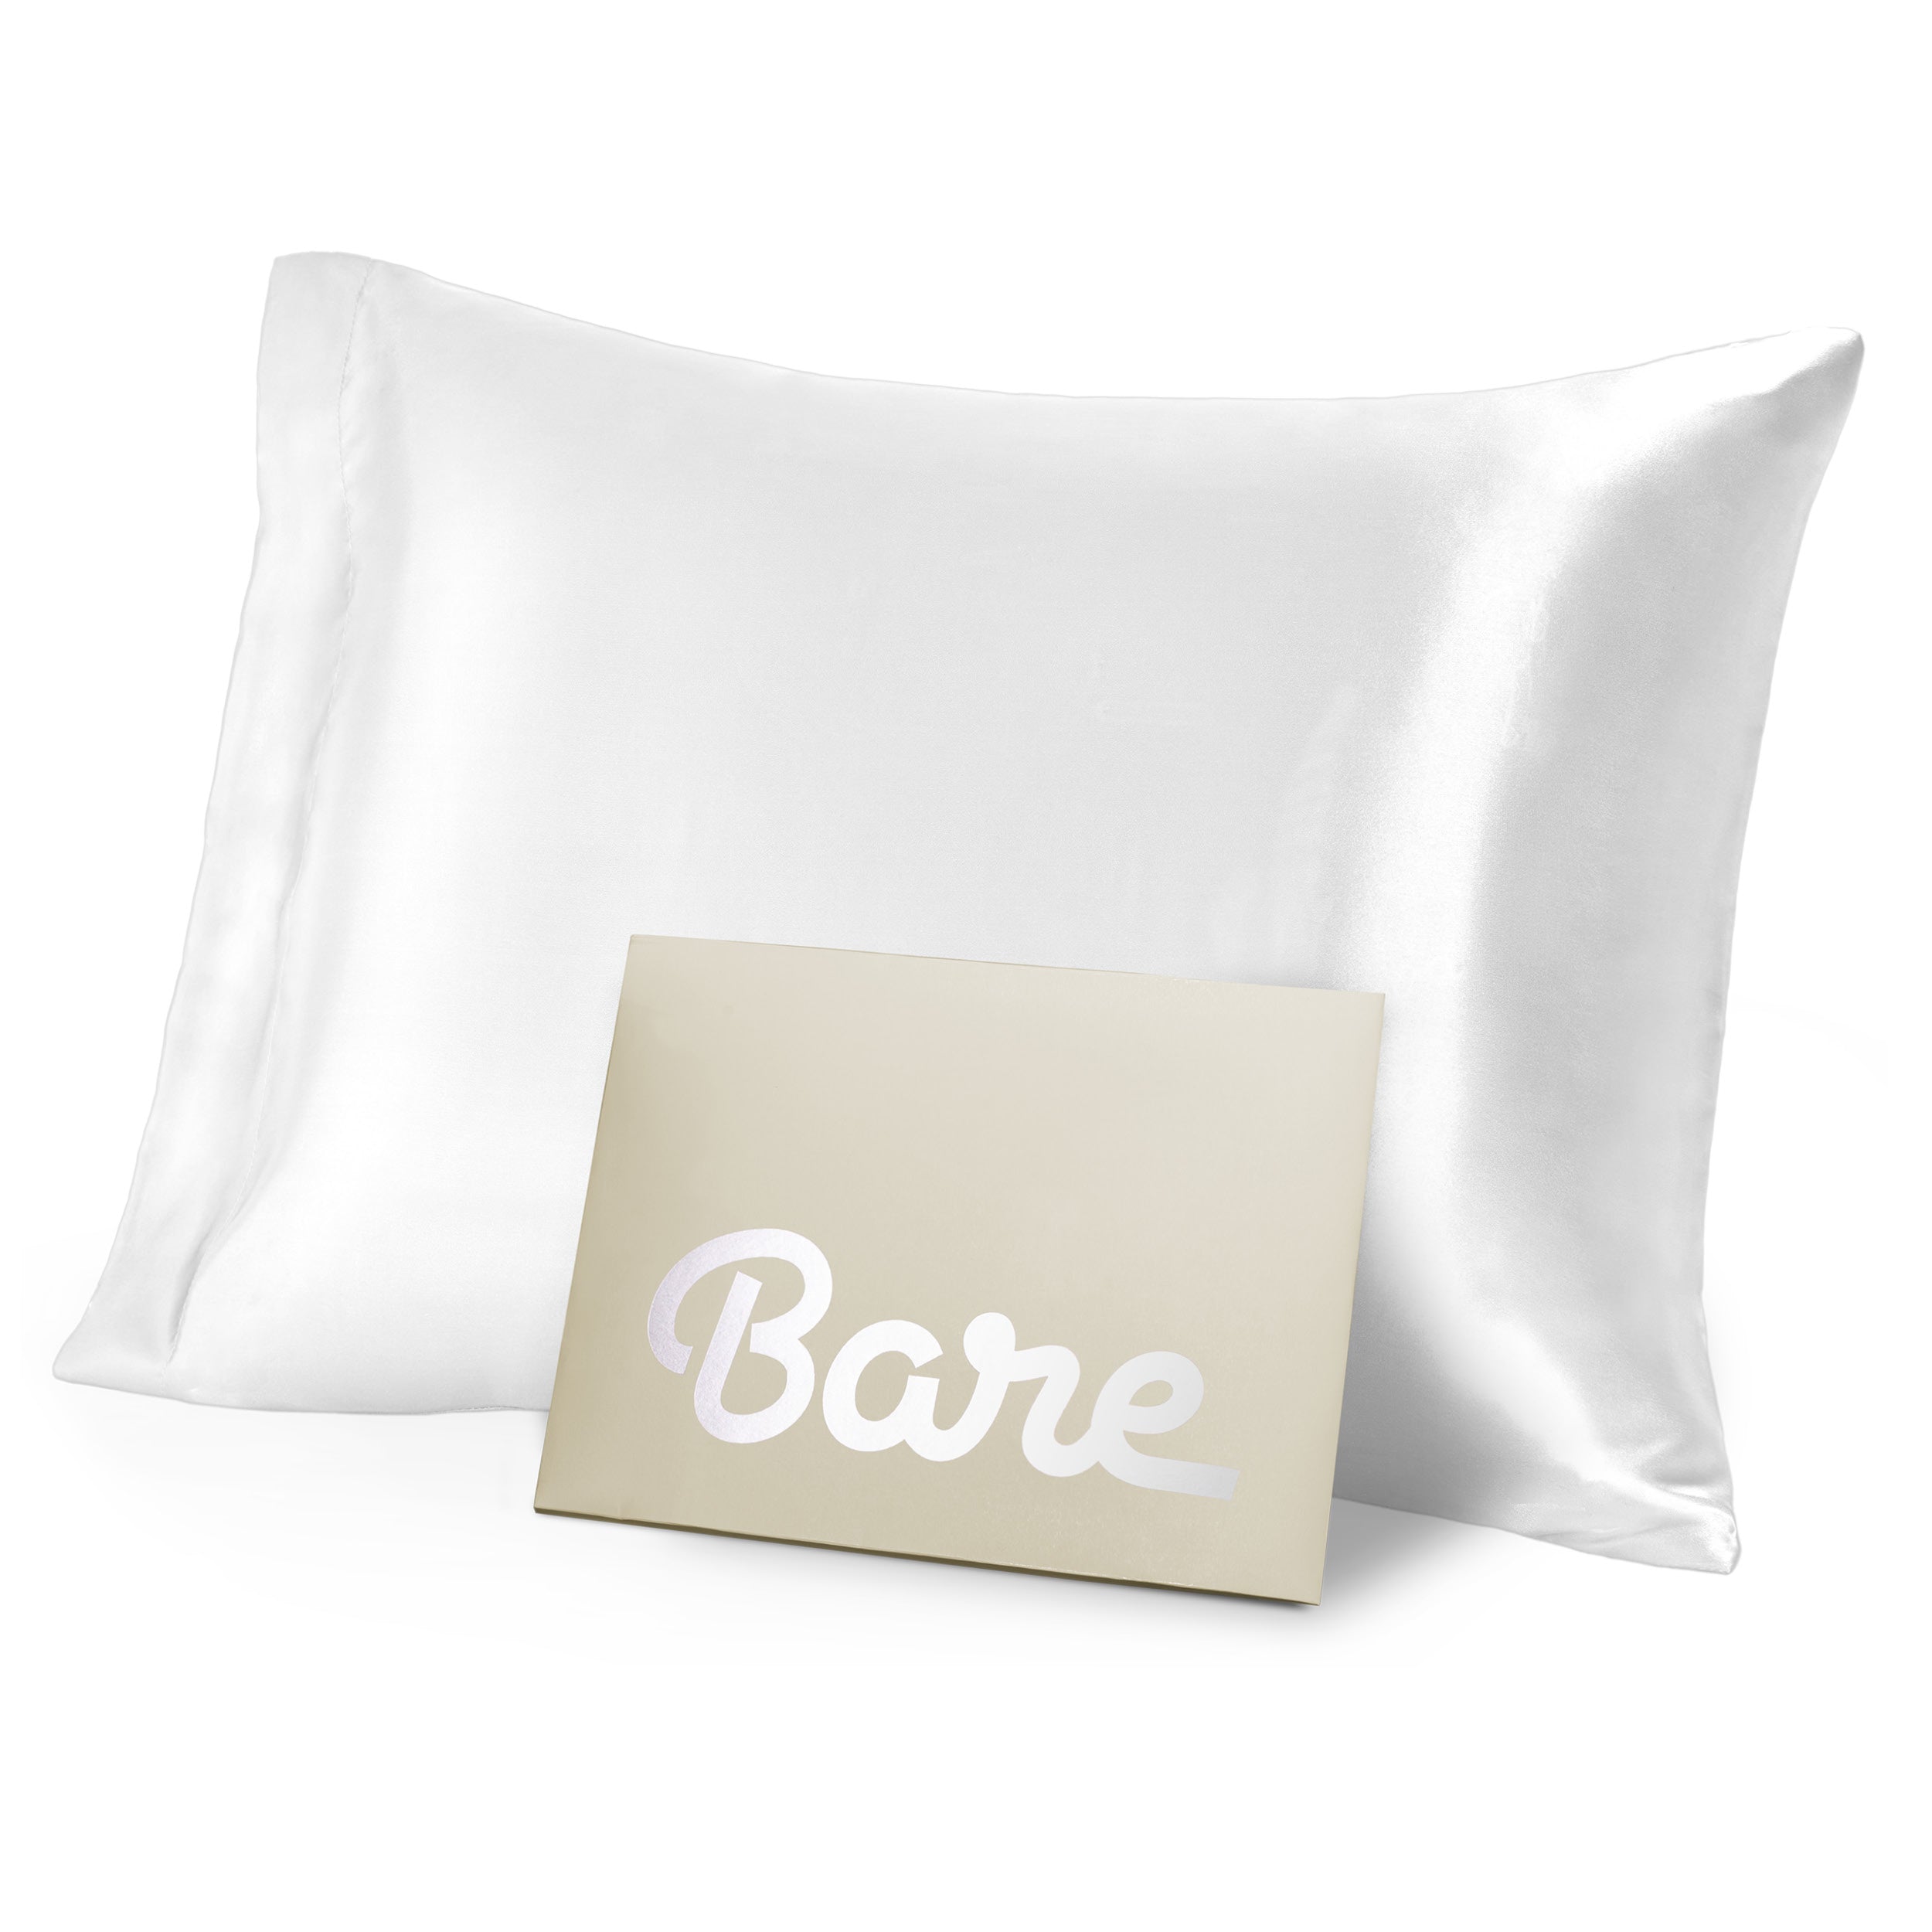 A white mulberry silk pillowcase on a pillow